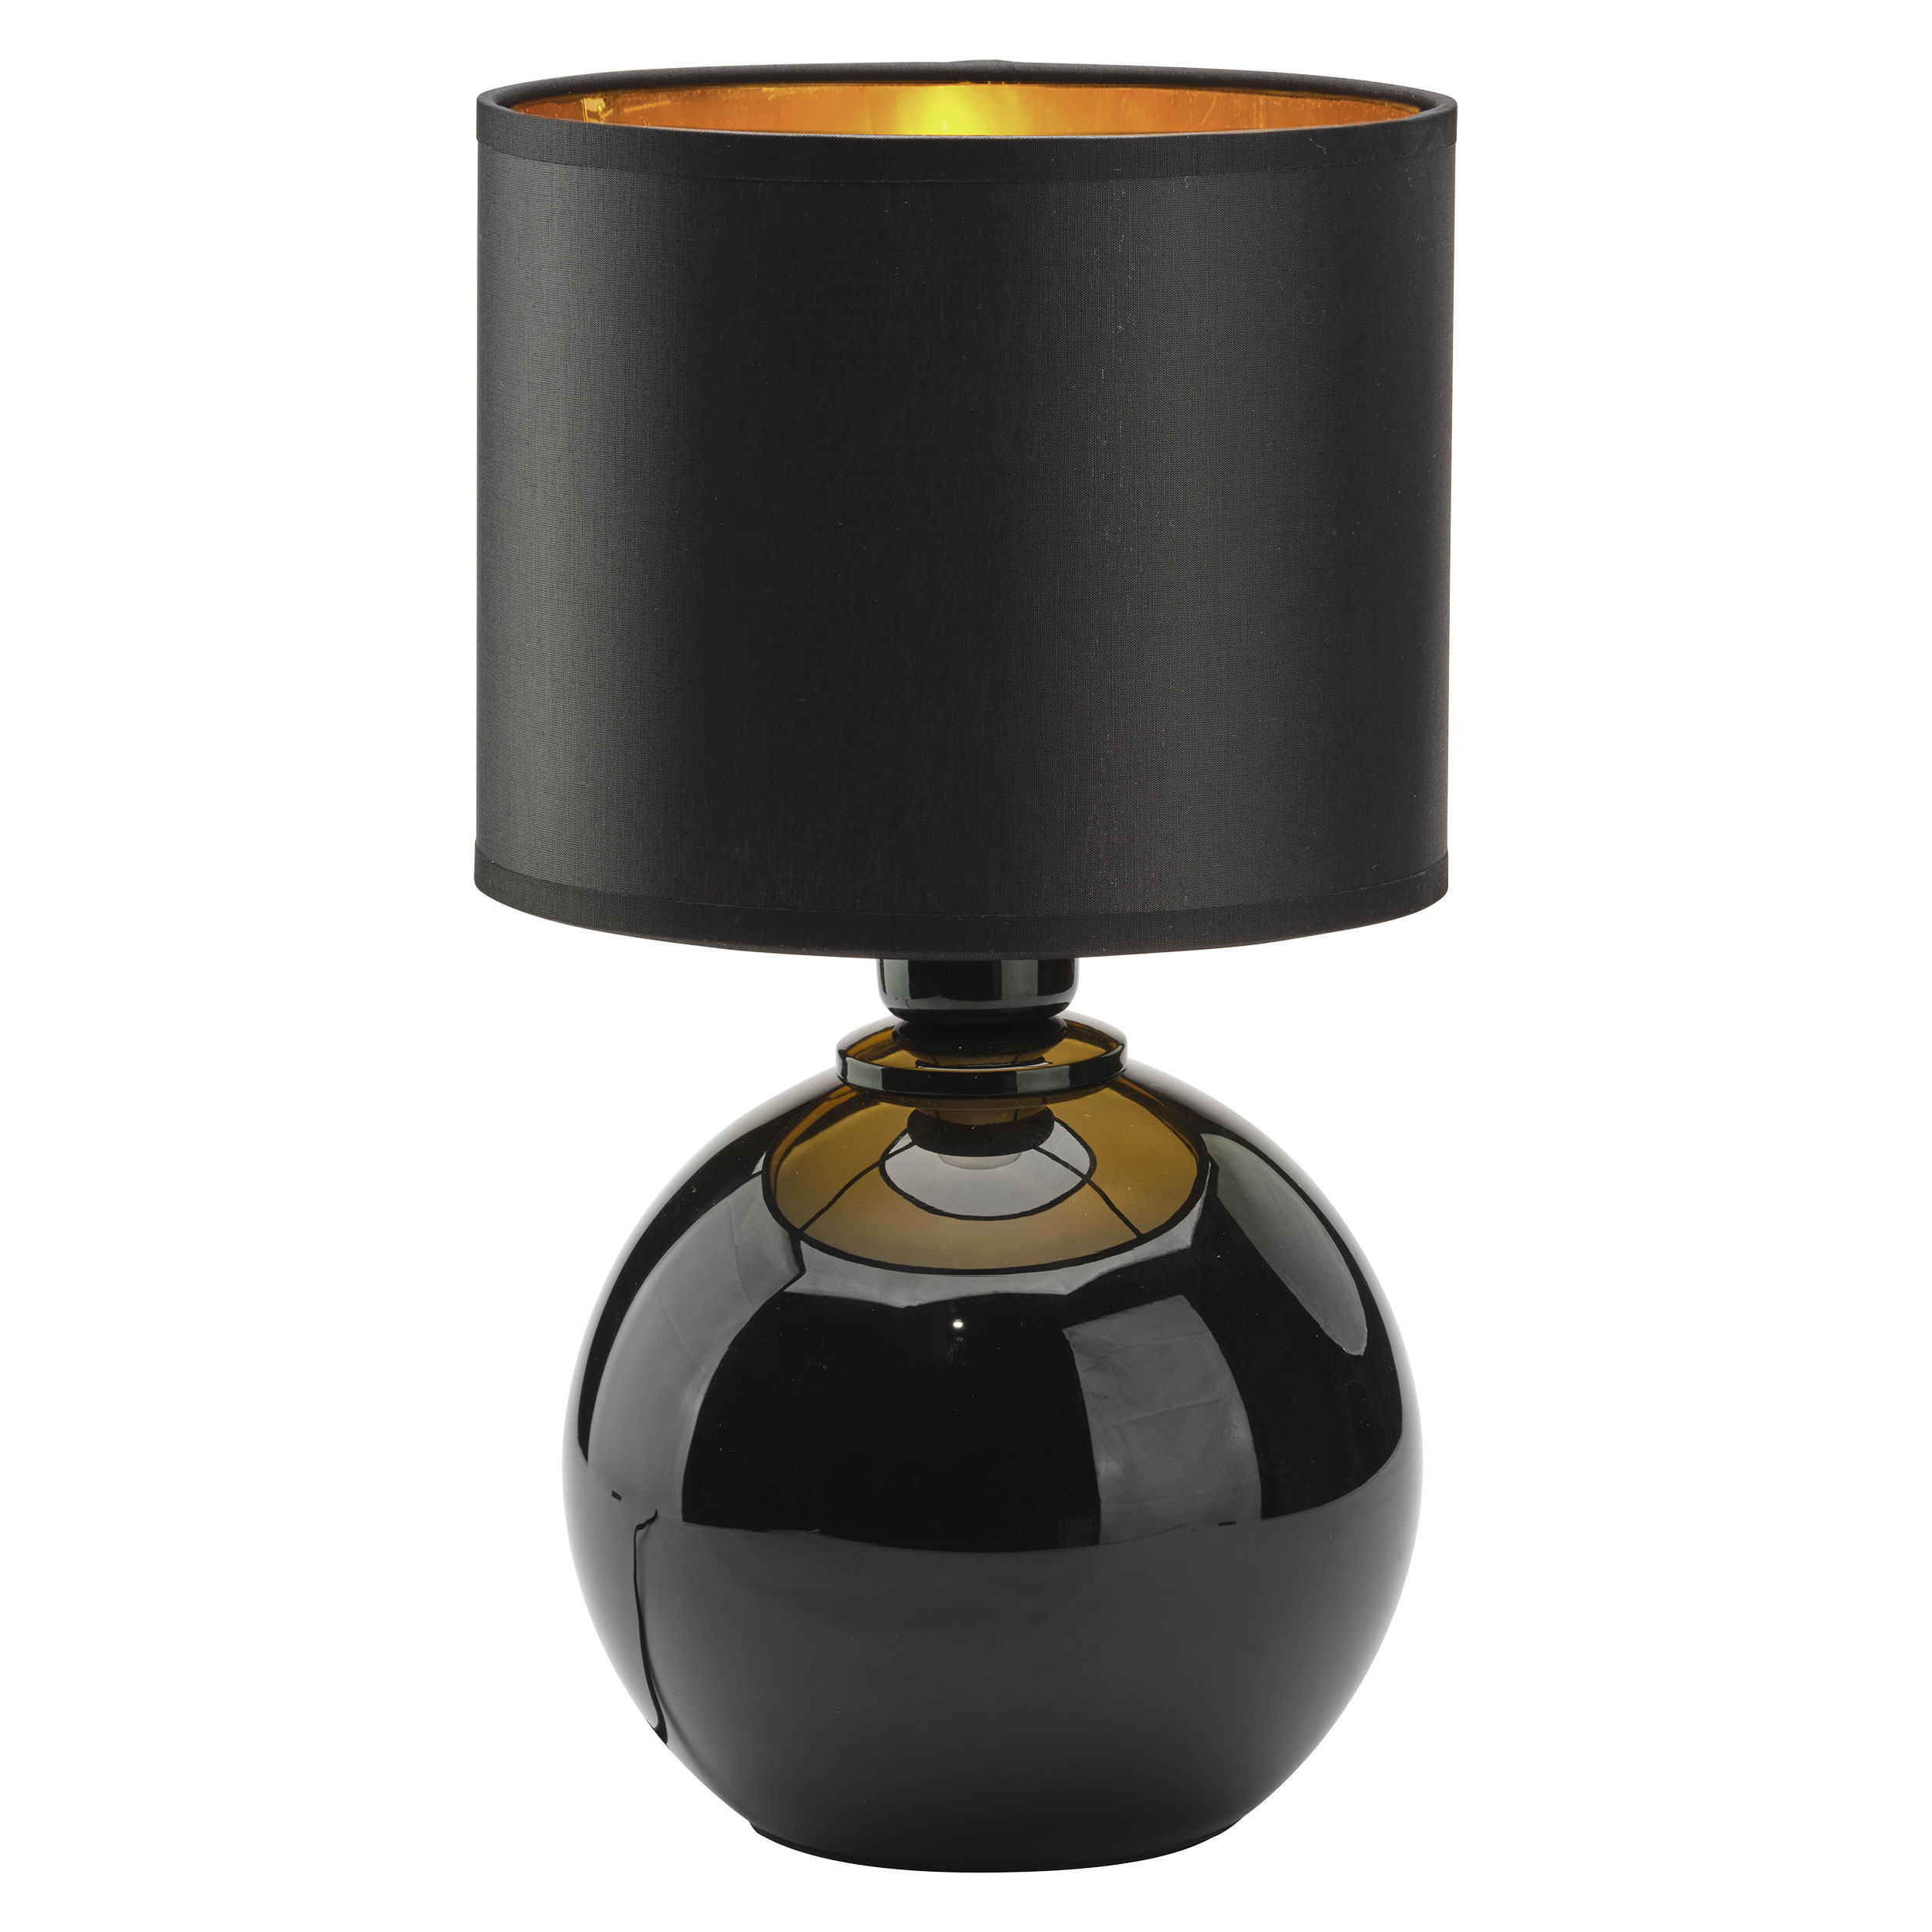 TK Palla bordslampa, Small - guld, svart tyg och svart glas